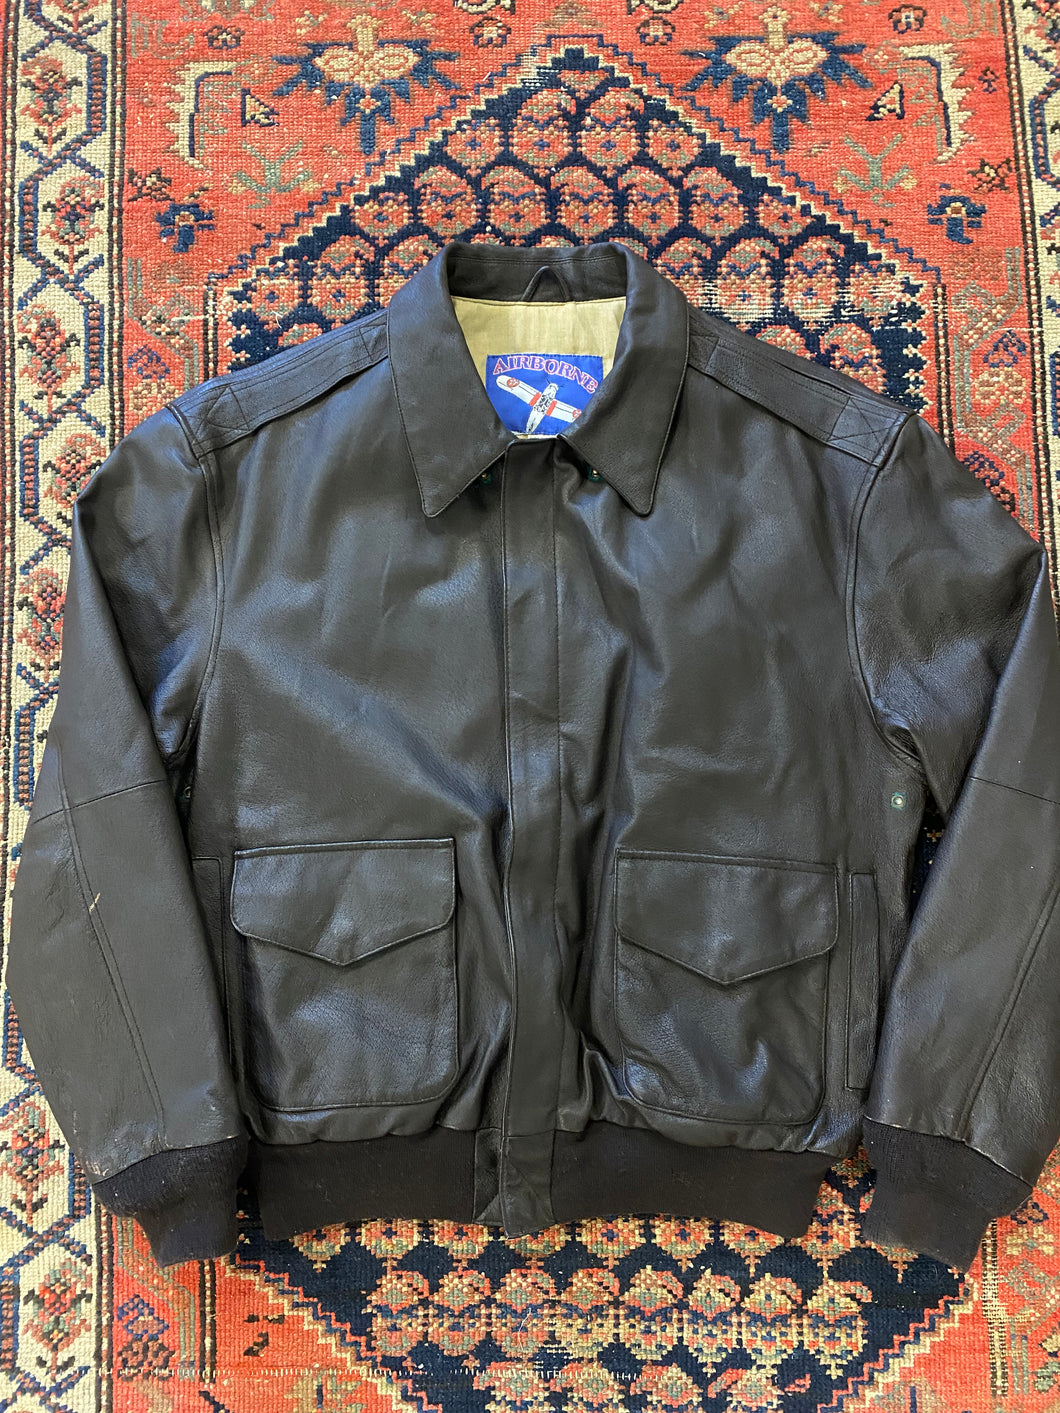 90s Leather Airborne Jacket - M